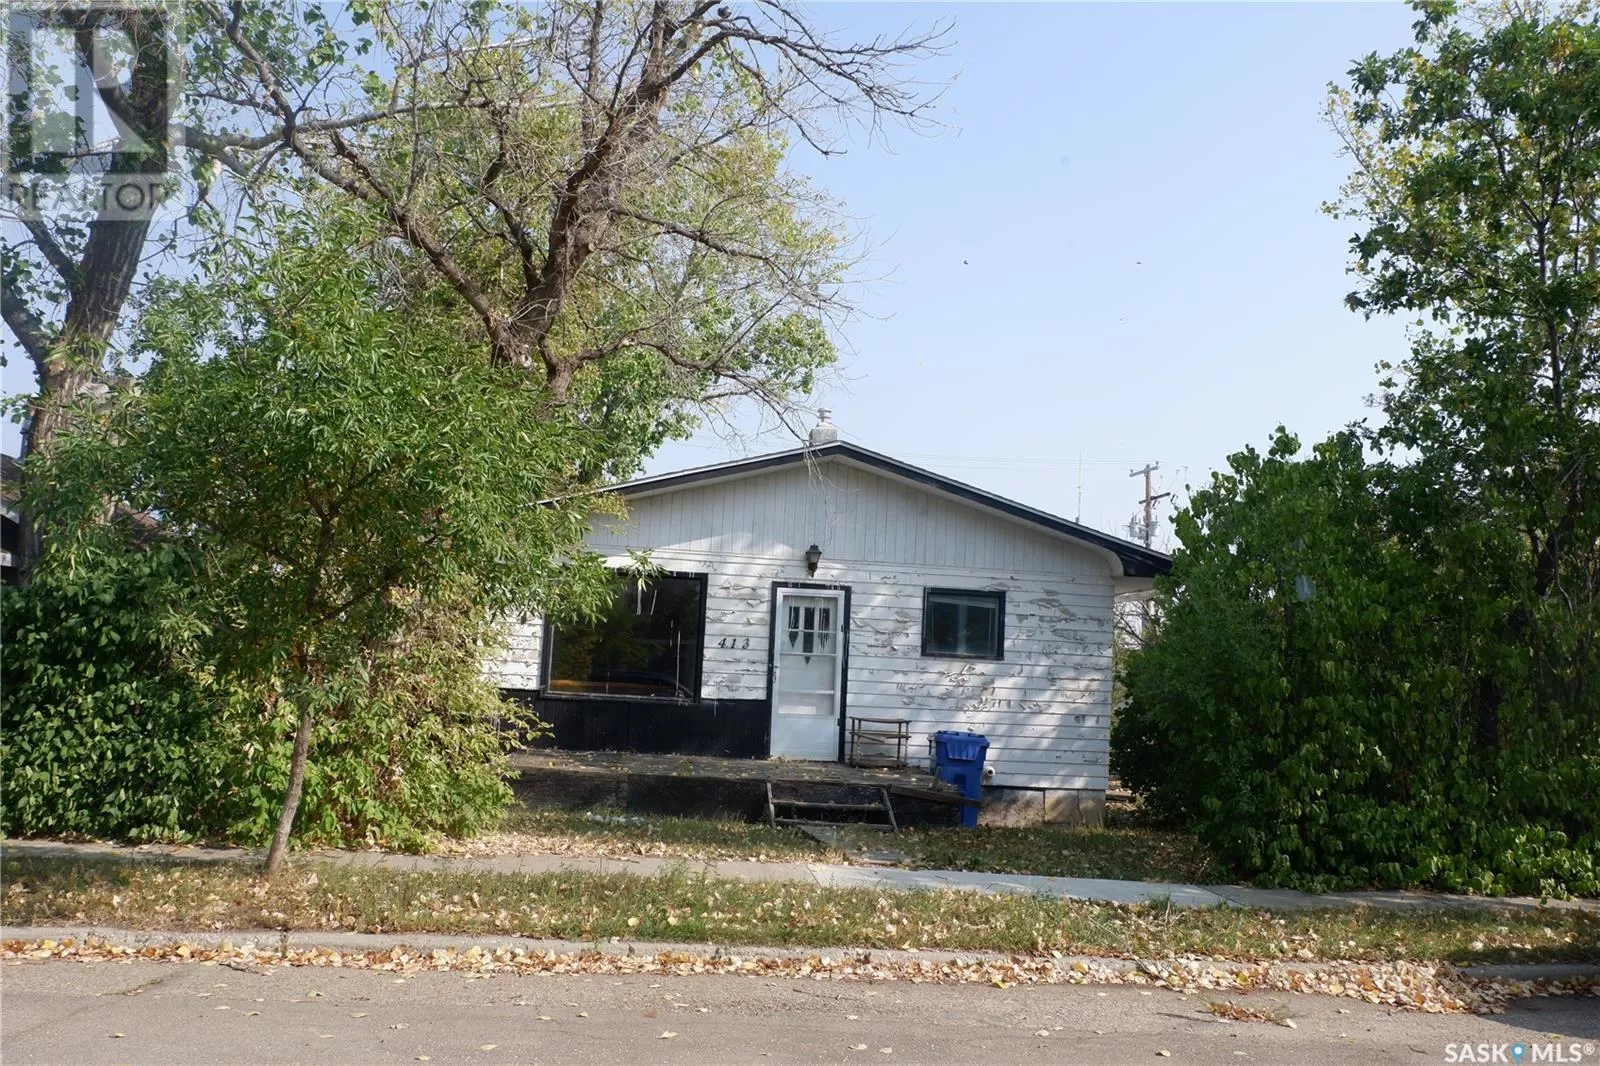 House for rent: 413 2nd Avenue E, Assiniboia, Saskatchewan S0H 0B0